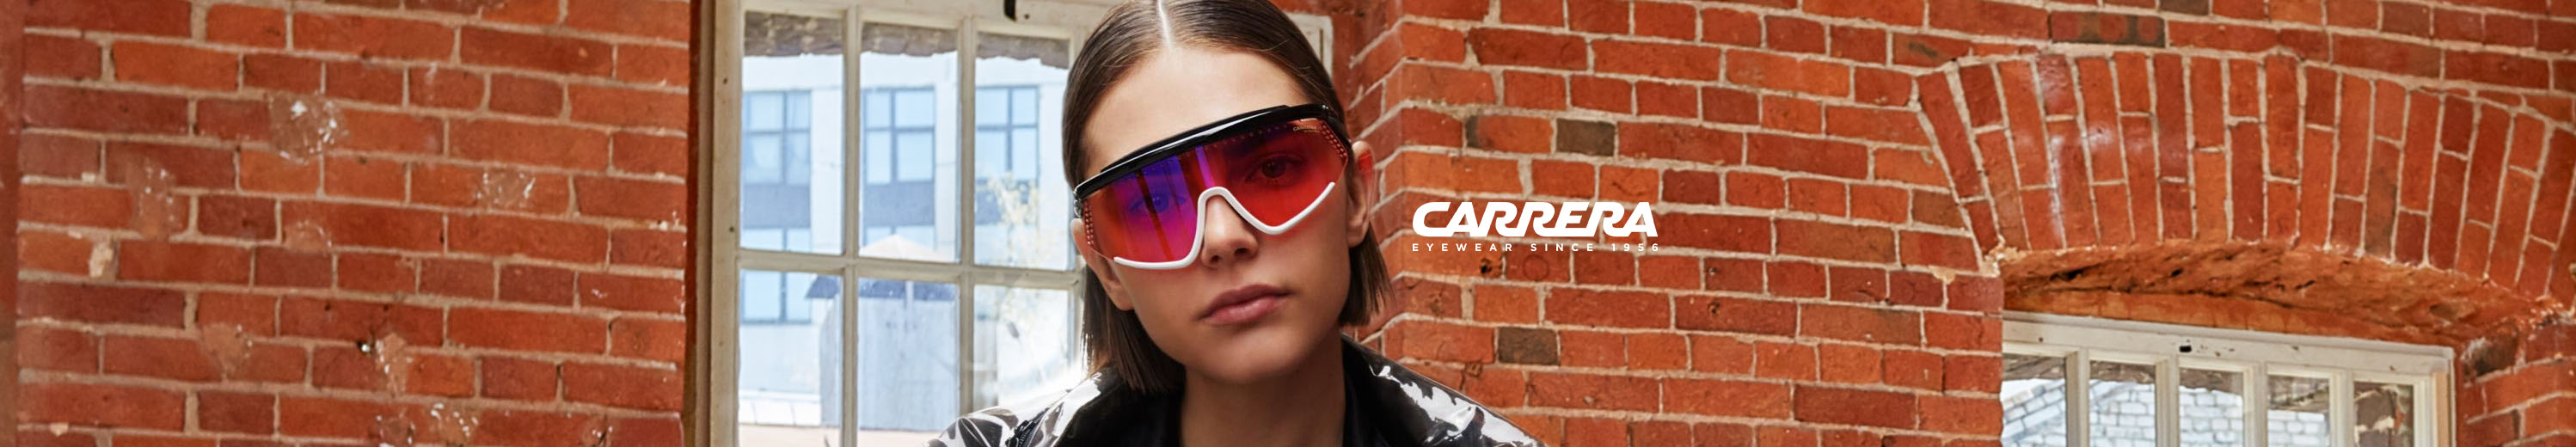 Carrera Irregular Sunglasses